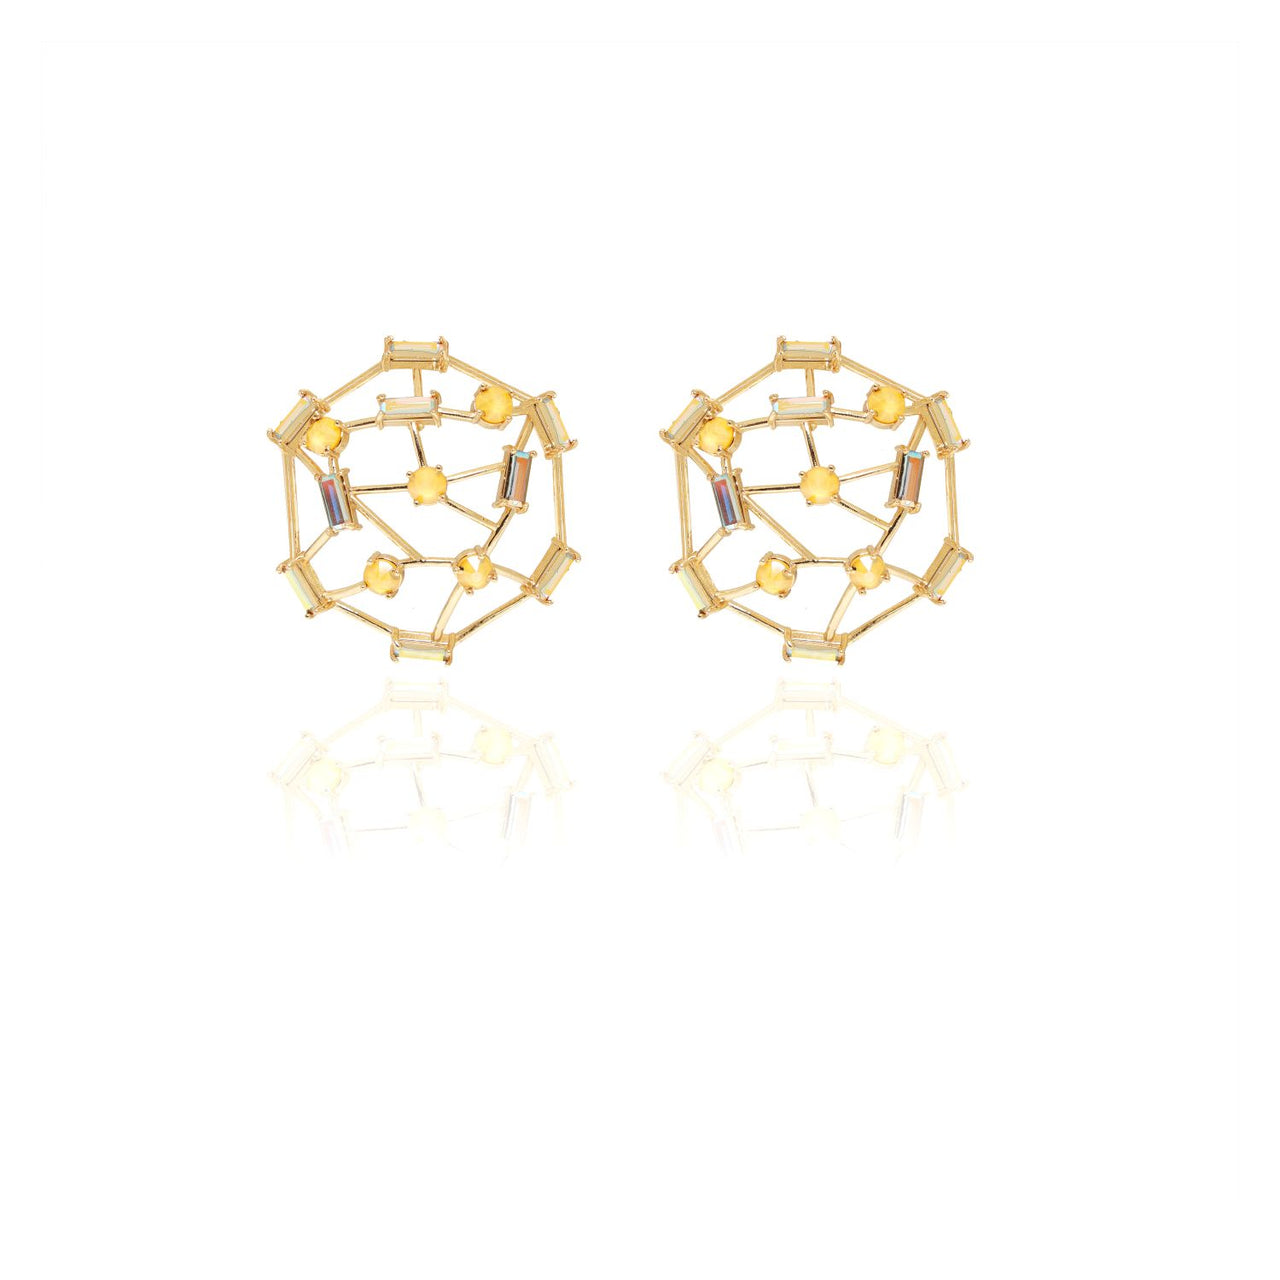 Yellow stone earrings